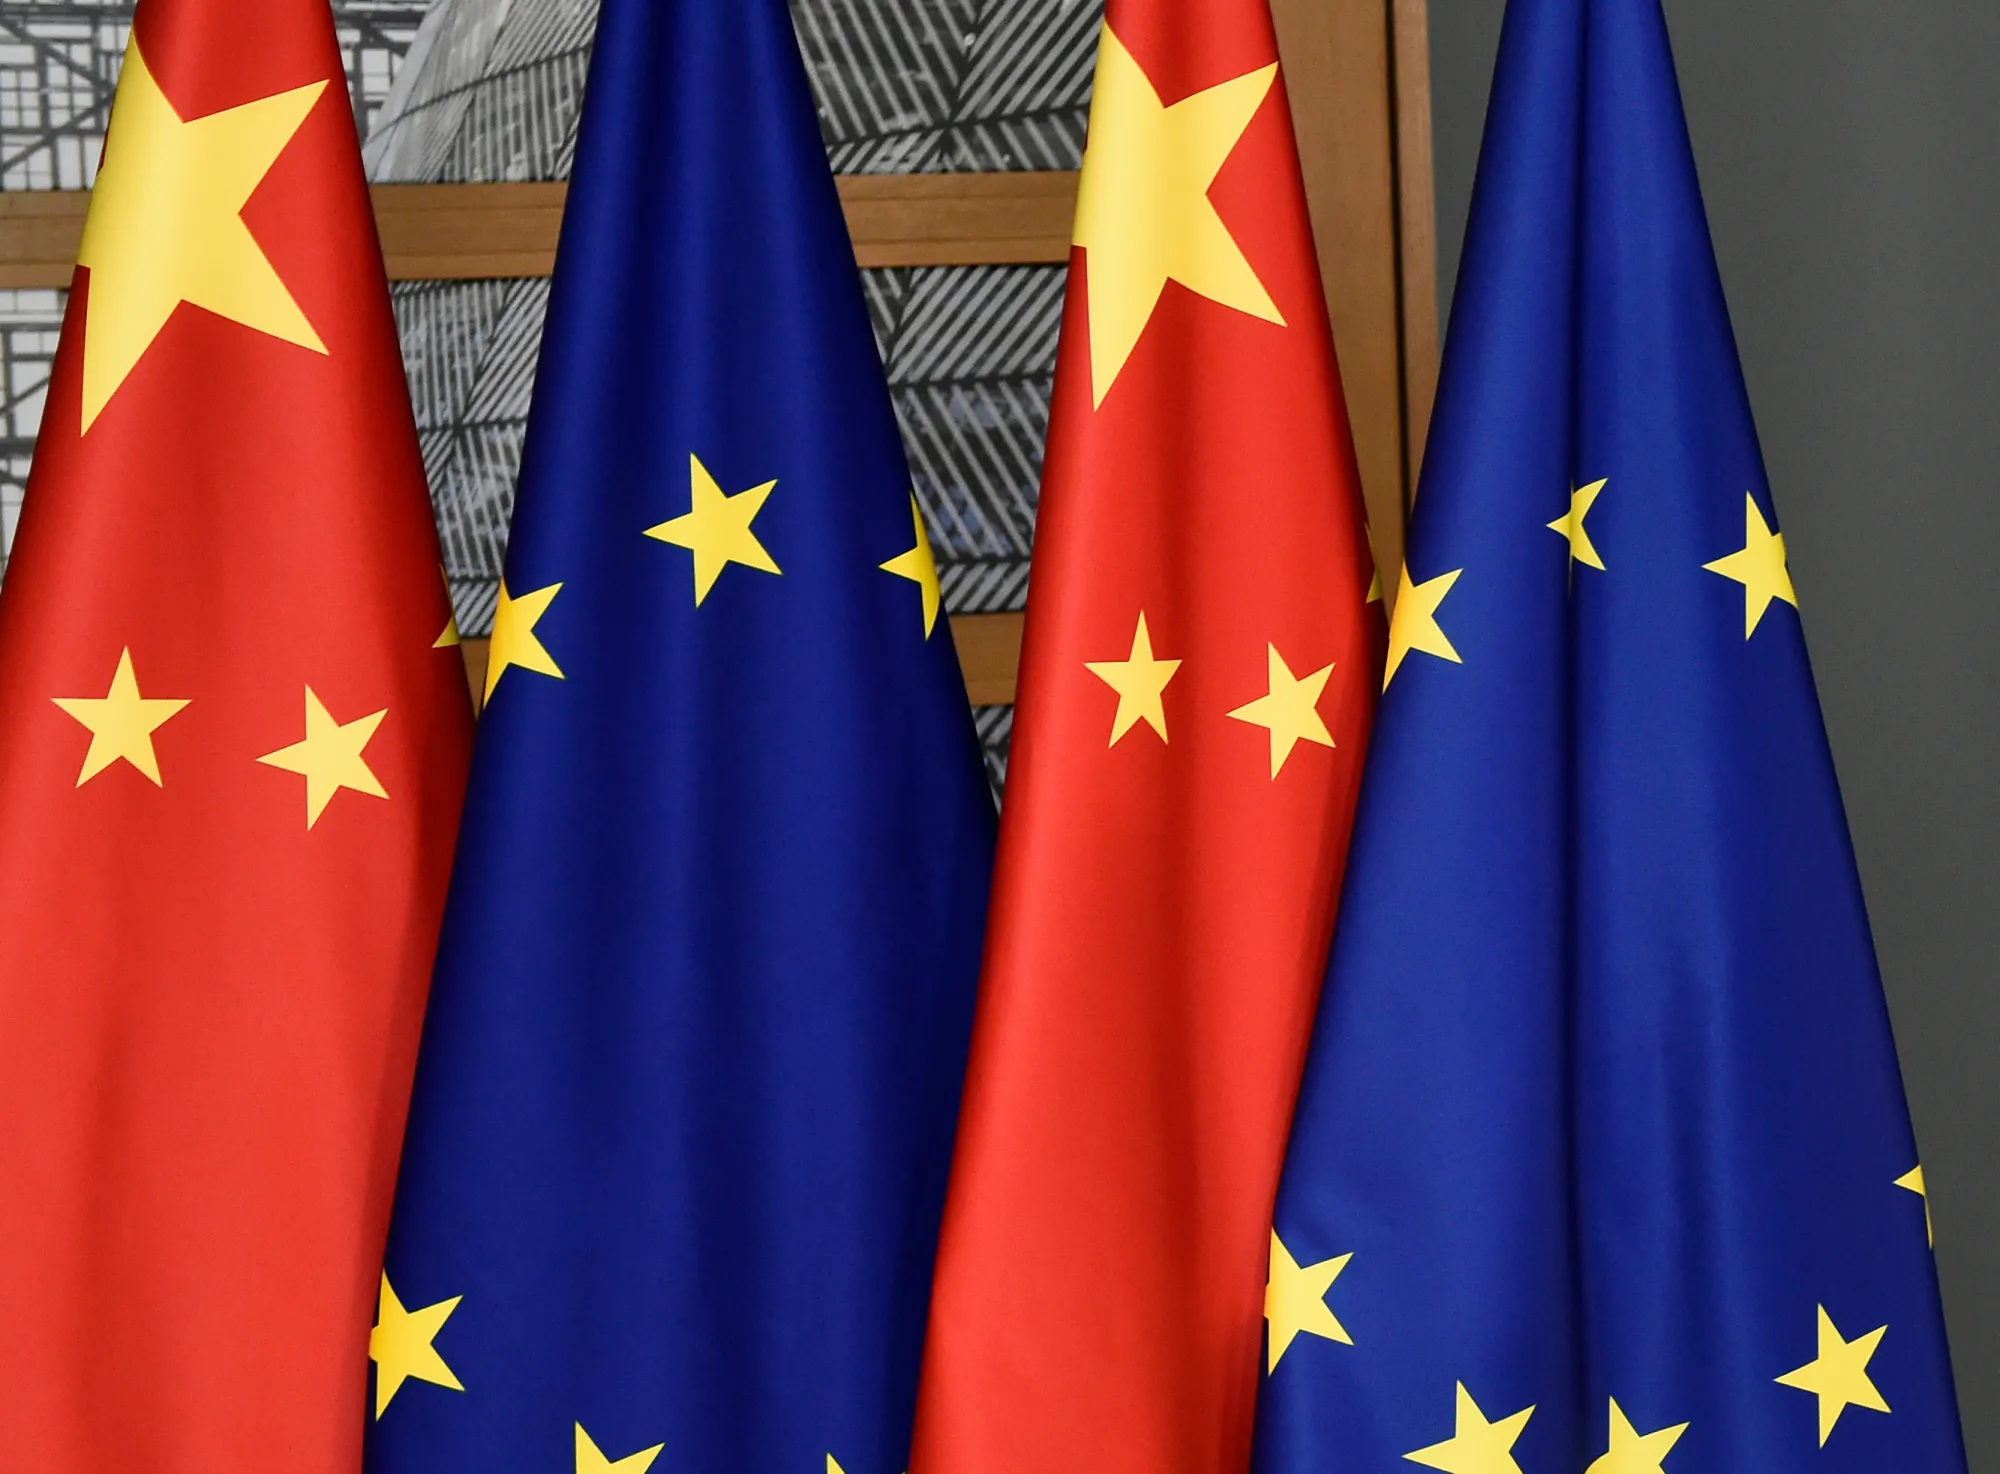 China rejects sanctions as Ukraine war tops EU summit agenda